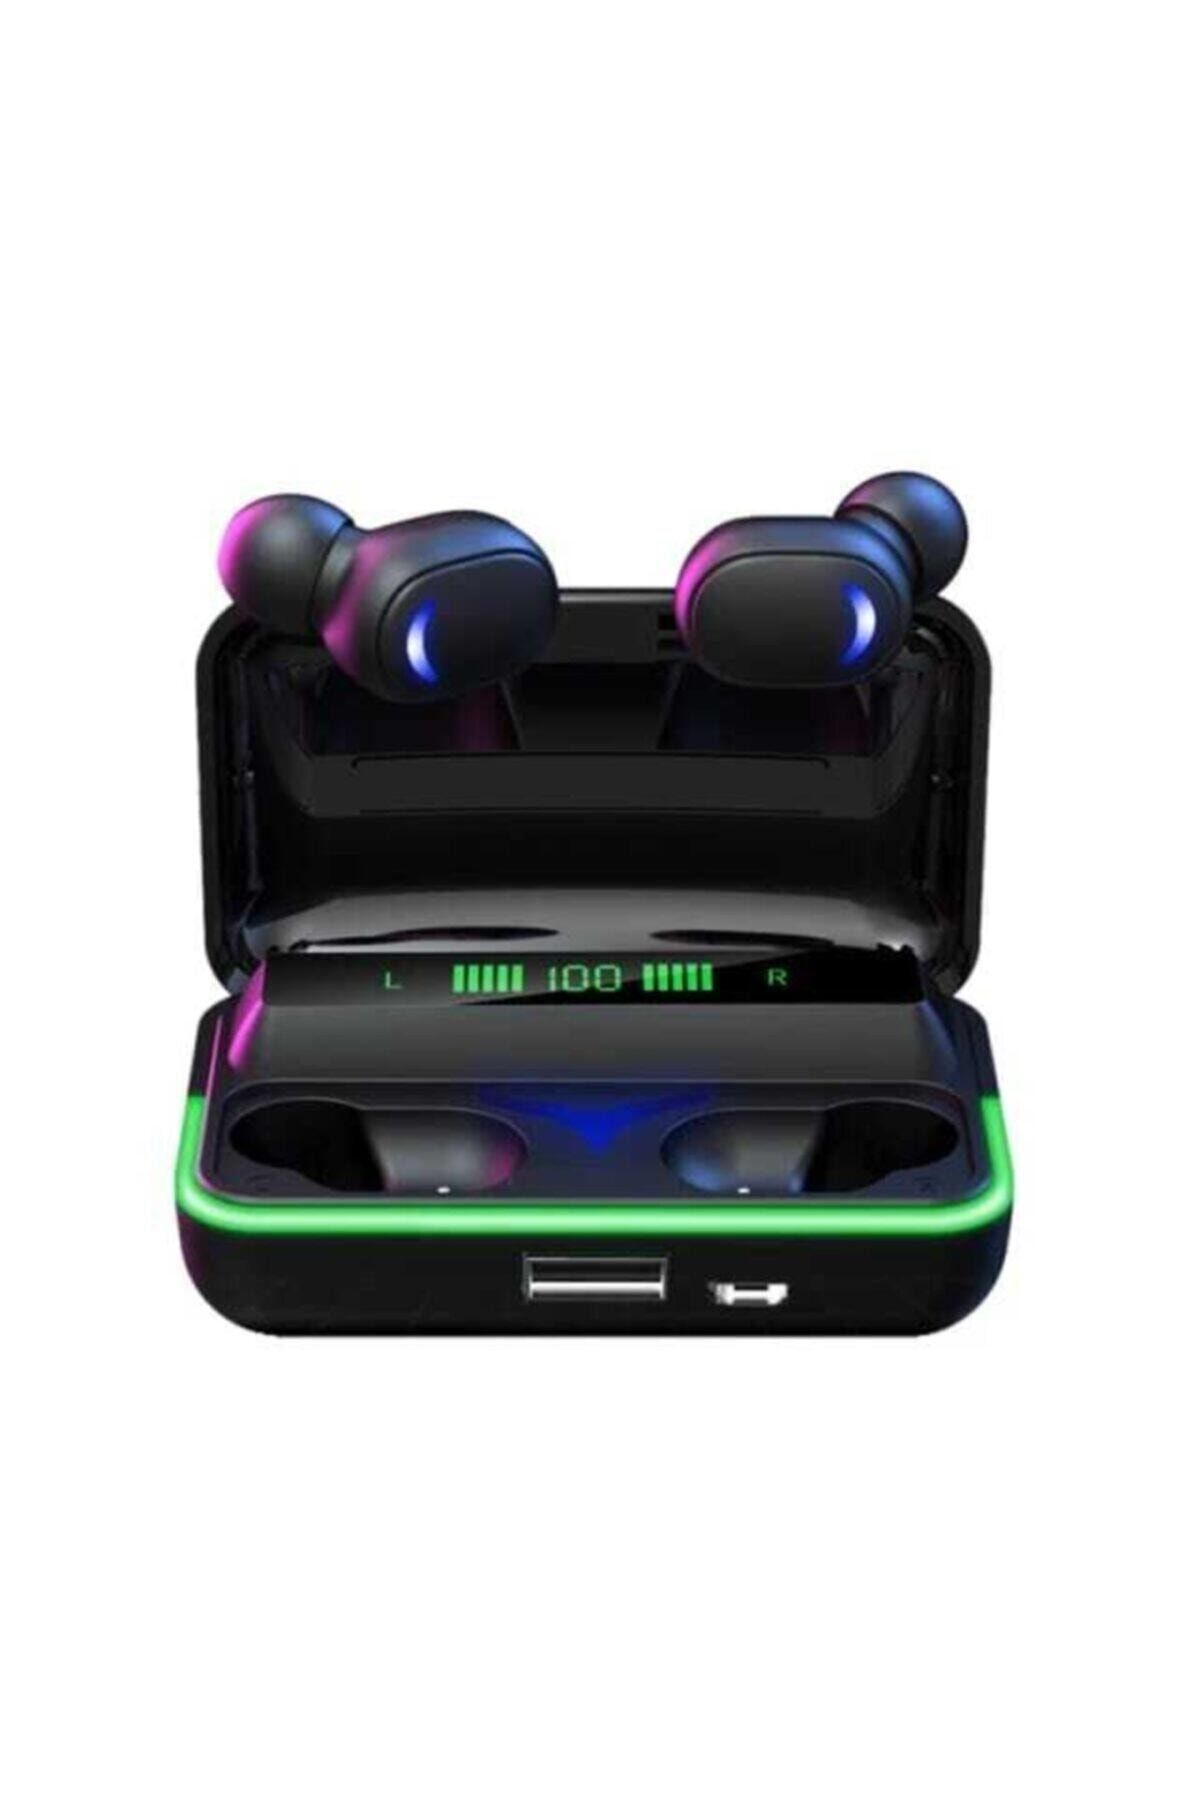 İMEXTECH Çift Dijital Şarj Göstergeli Powerbanklı Basslı Bluetooth Kulaklık E10 Pro